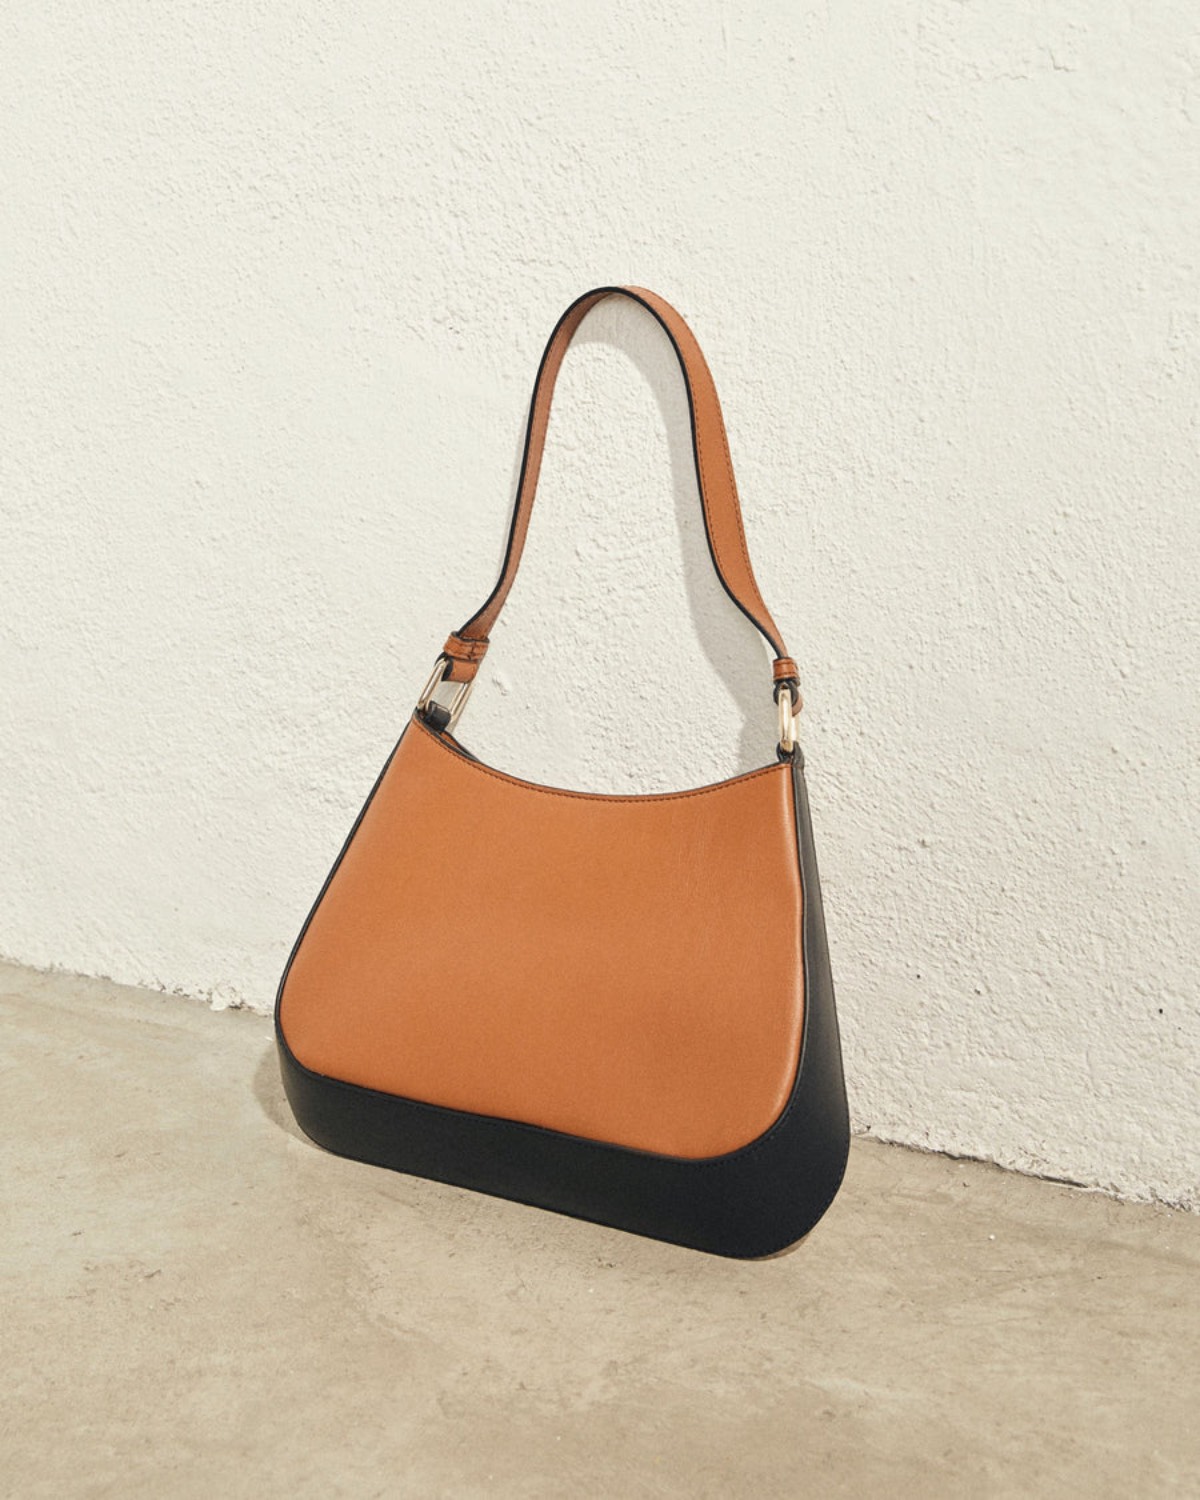 the-c-bicolor-tan-black-handbags-alohas-803119-900x